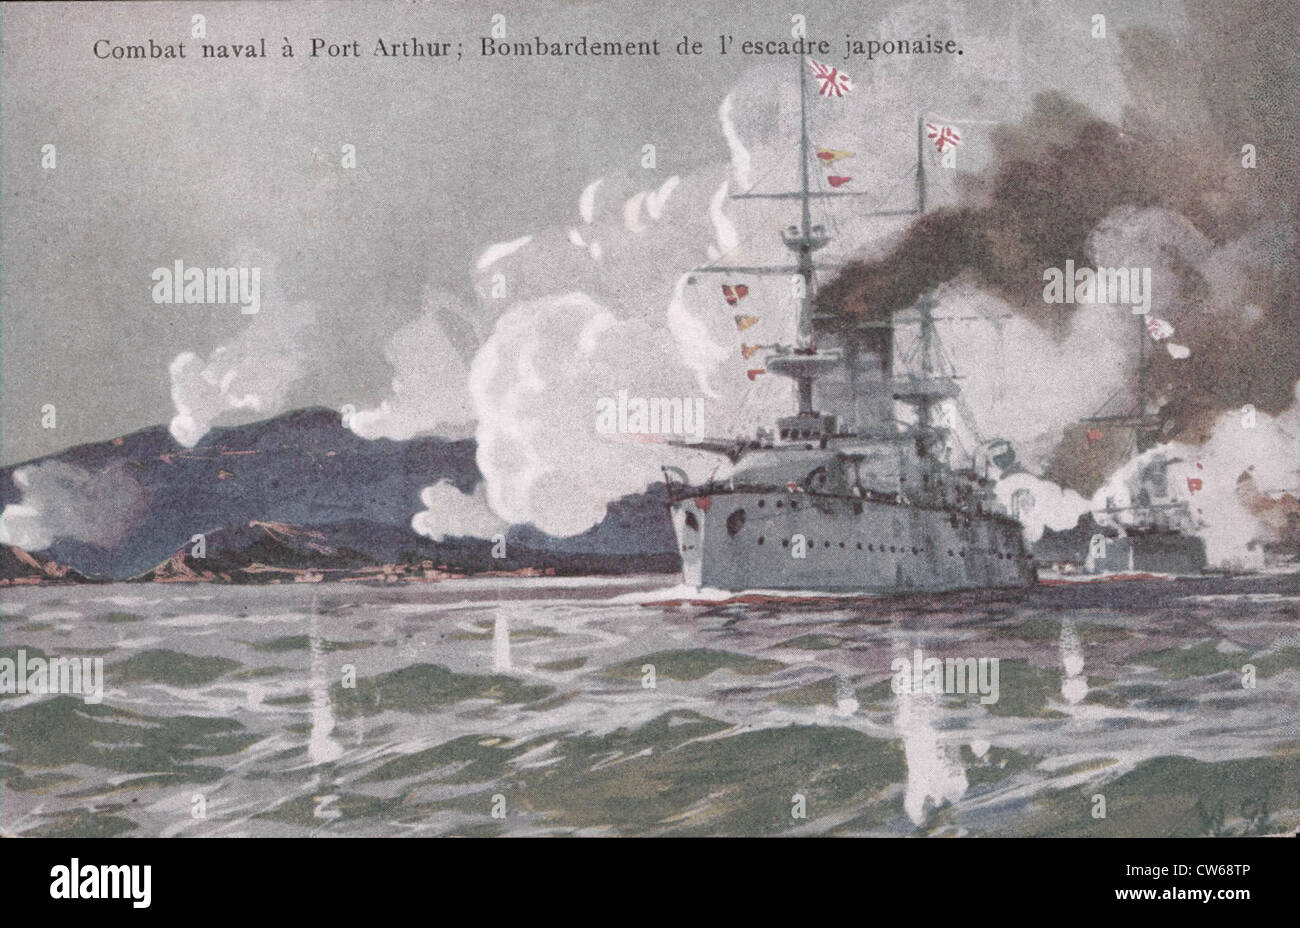 Russo-japanischer Krieg: Seeschlacht bei Port Arthur - Bombardierung der japanischen Staffel Stockfoto